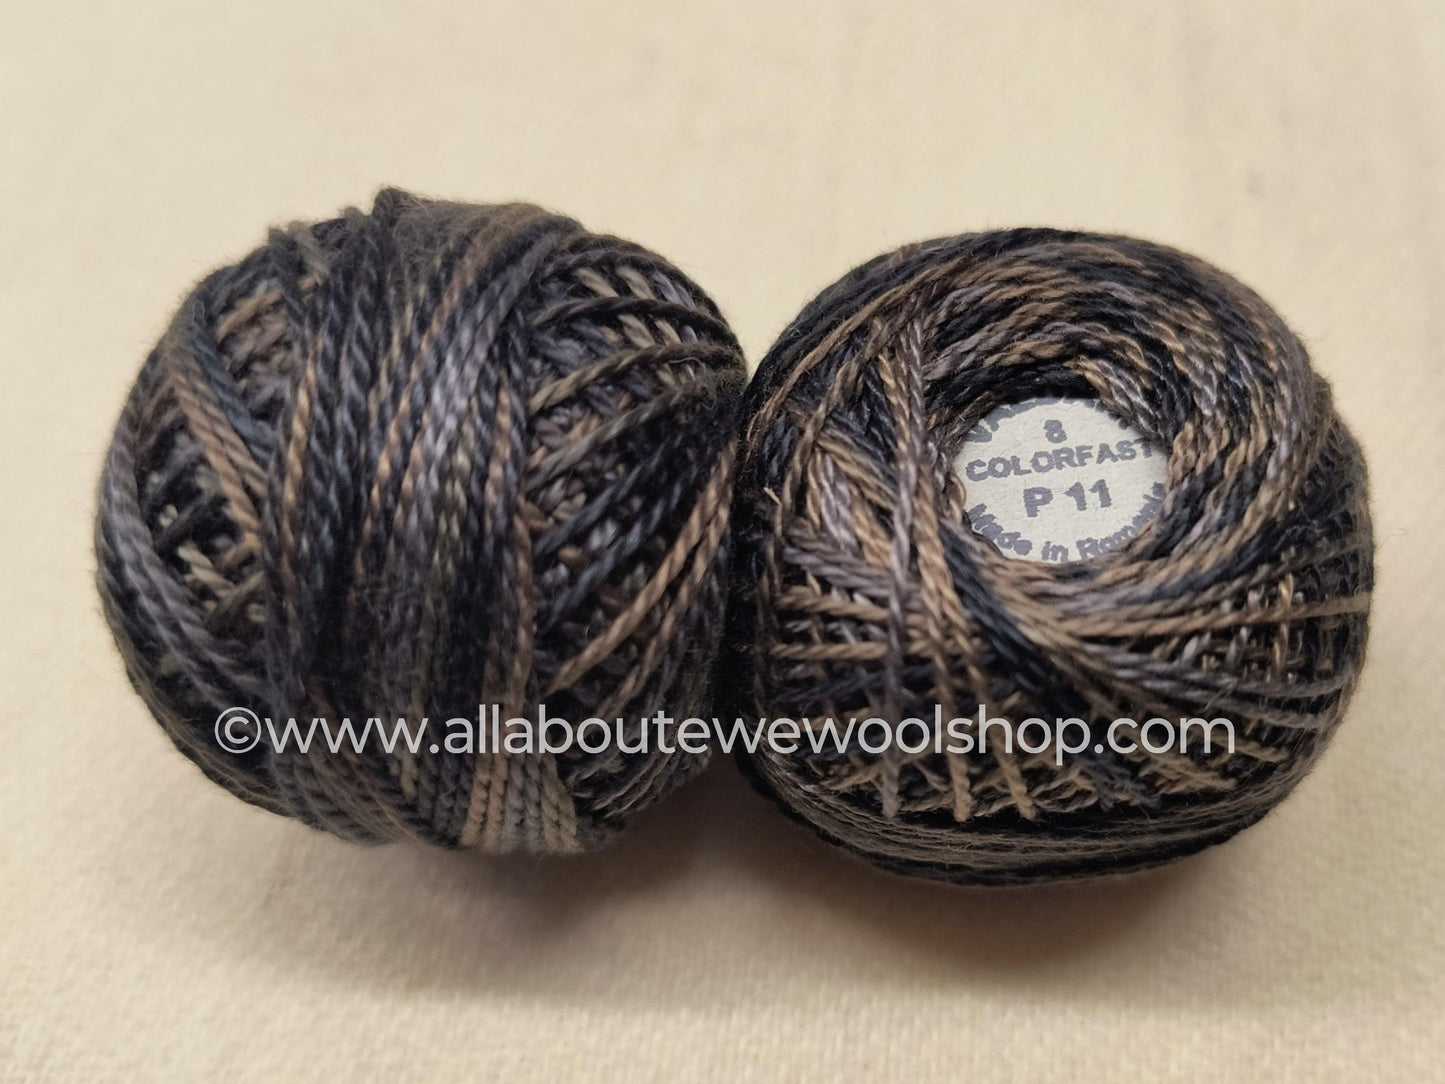 P11 #8 Valdani Pearl/Perle Cotton Thread - All About Ewe Wool Shop